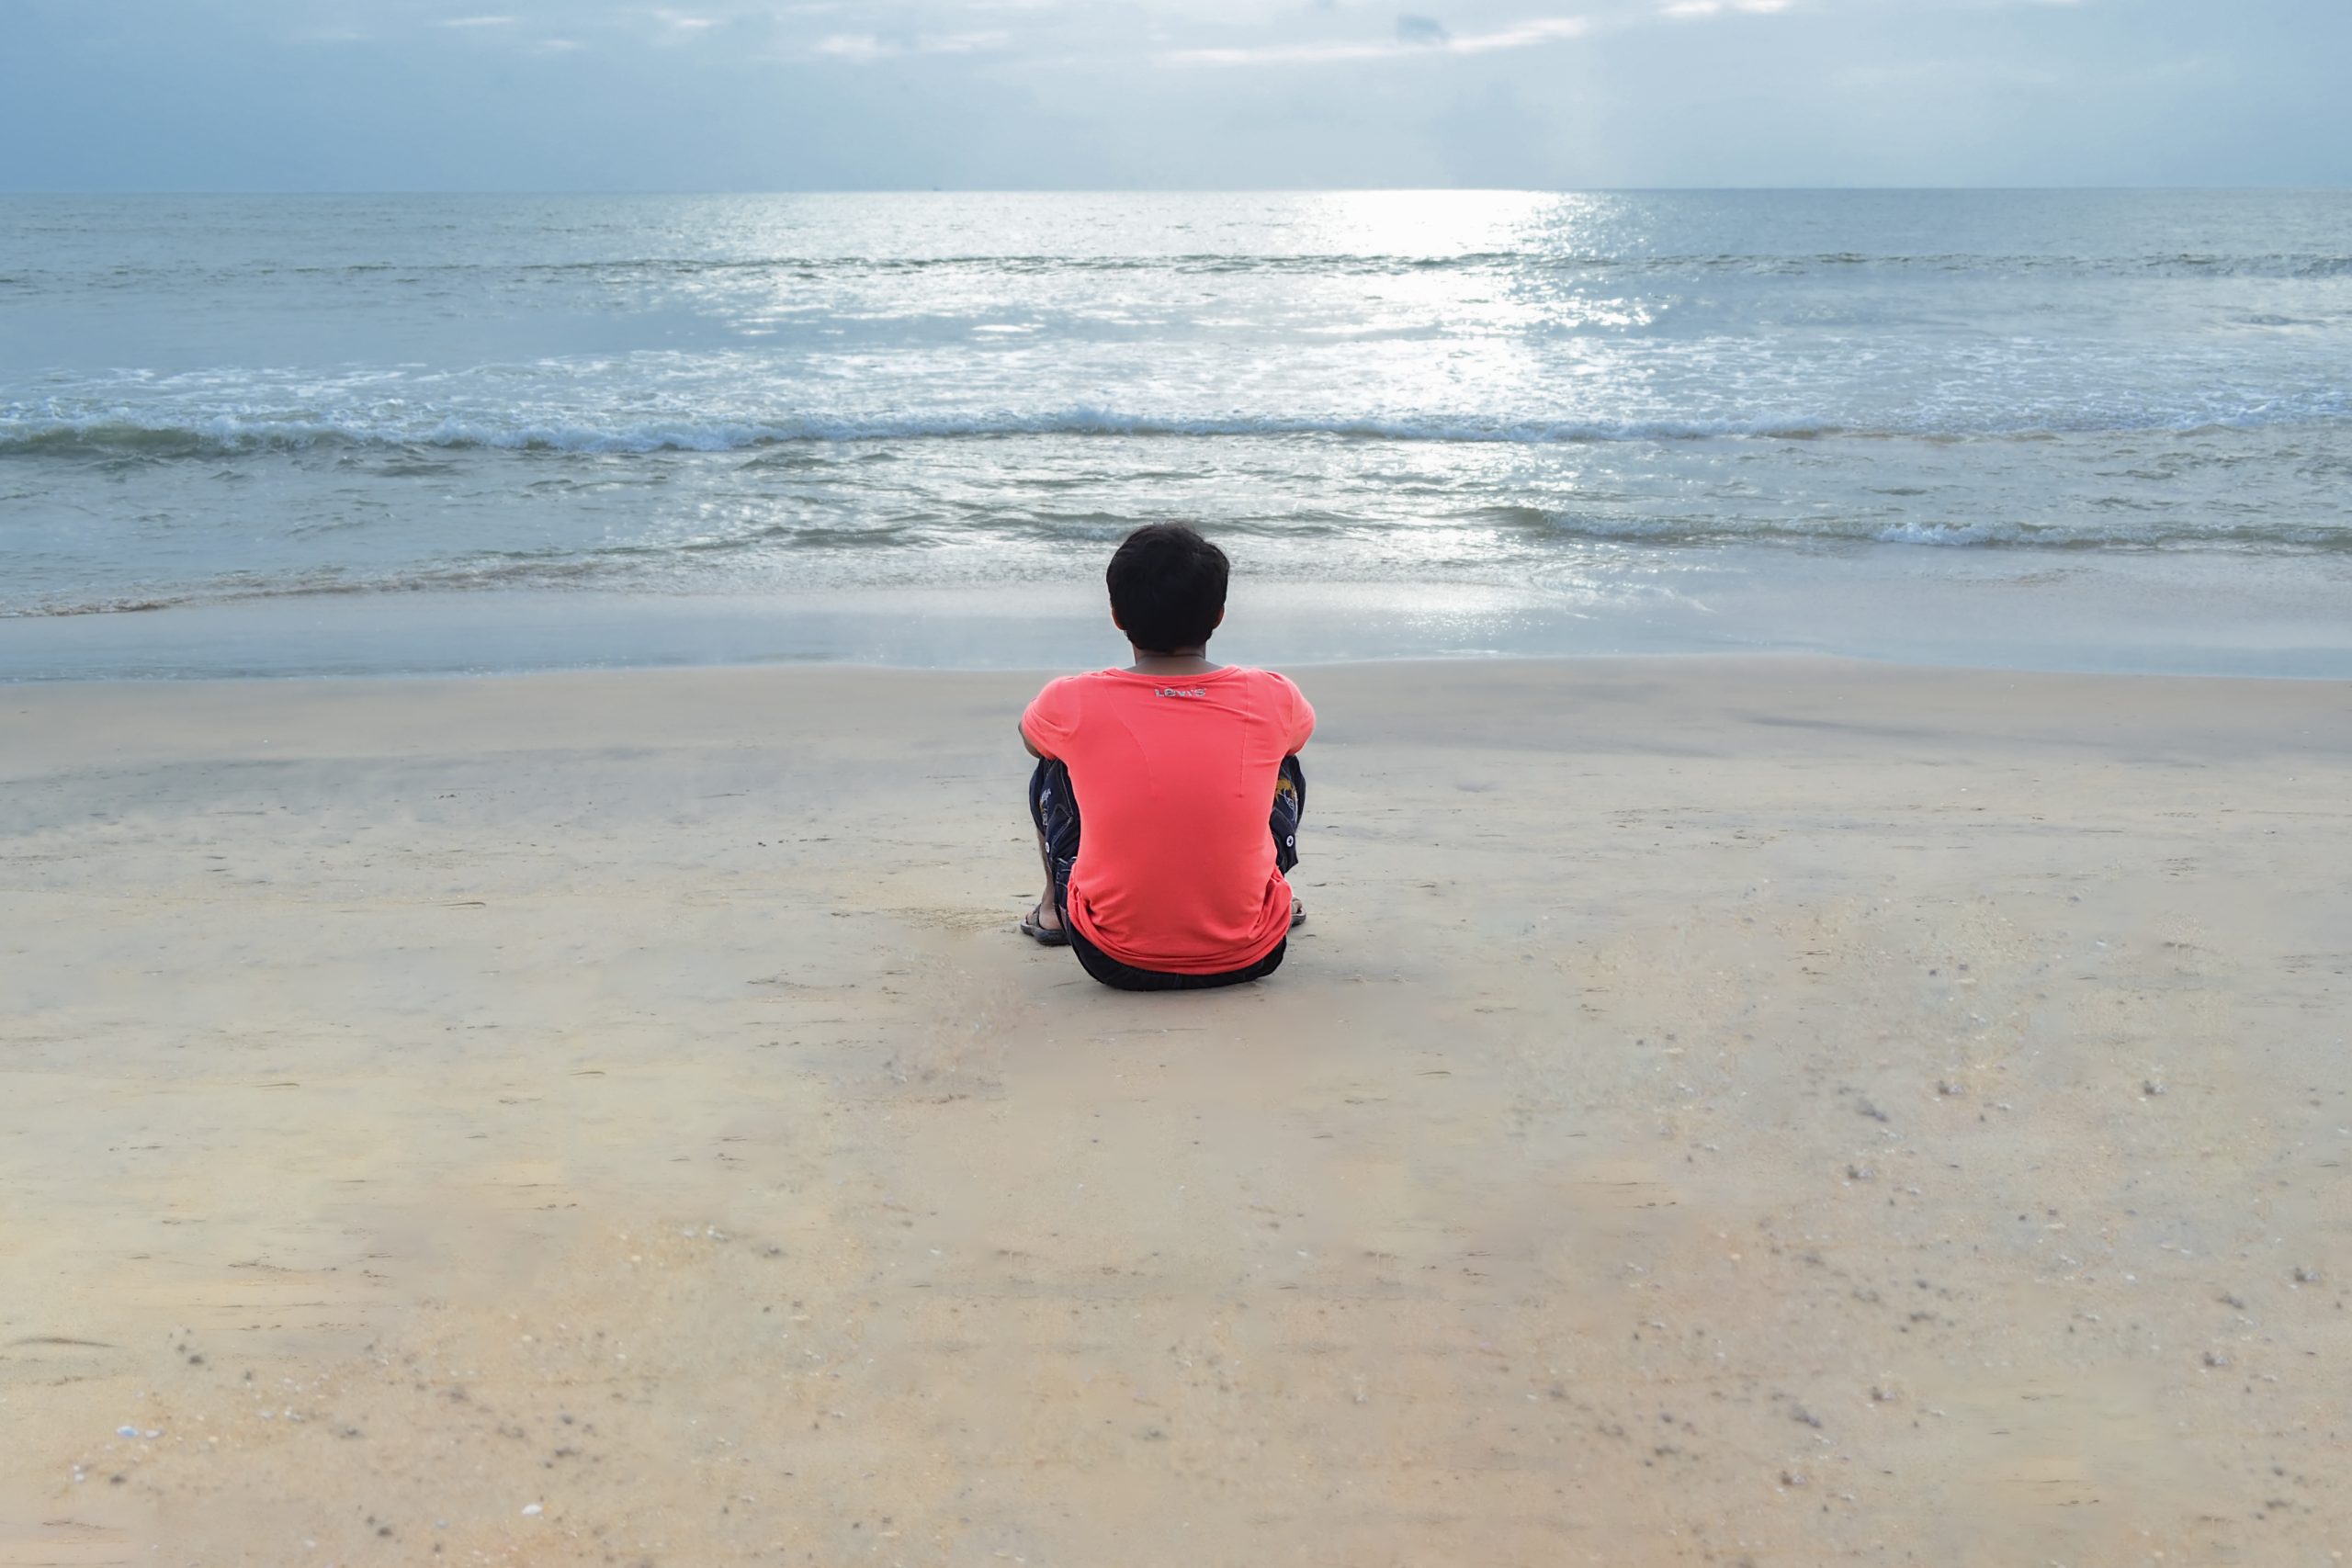 A boy on a beach Free Image by KJ Gourav on